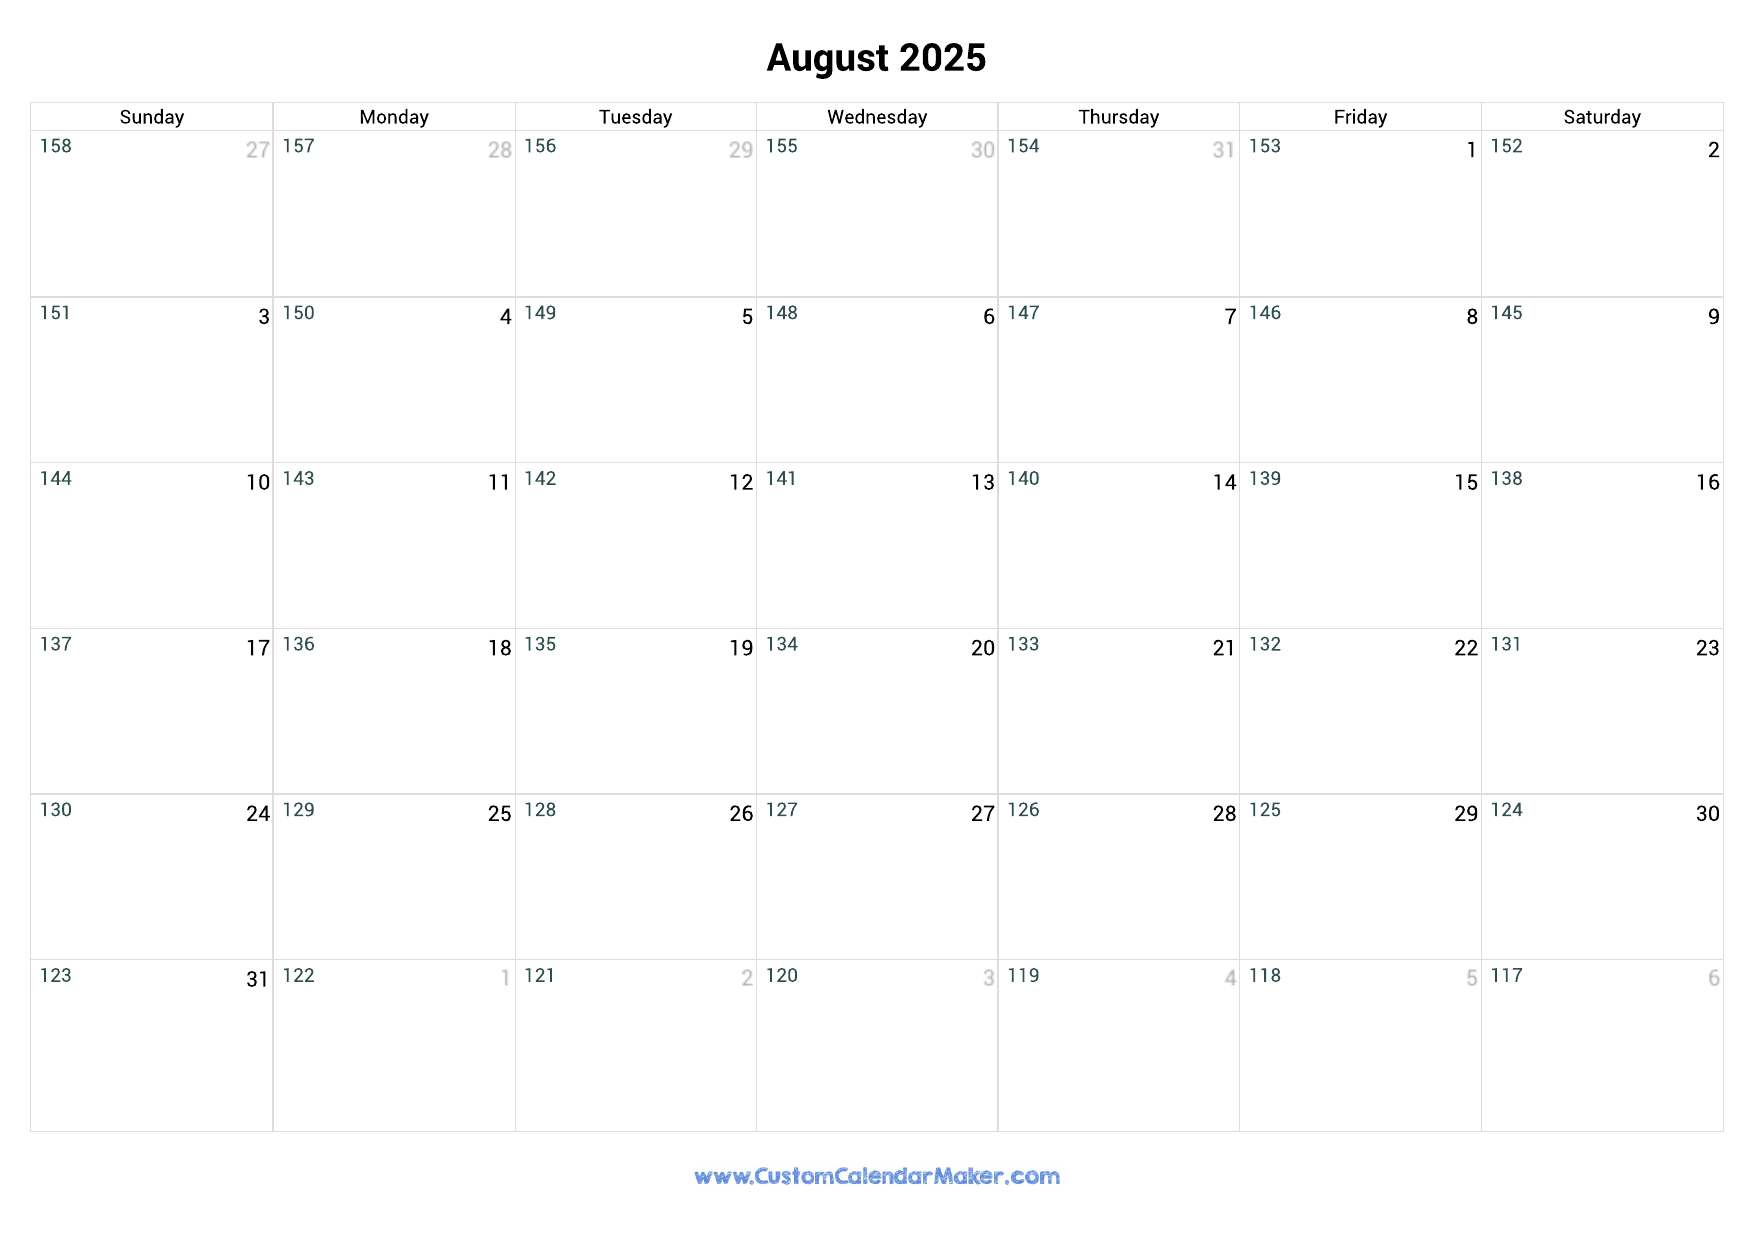 august-2025-remaining-days-calendar